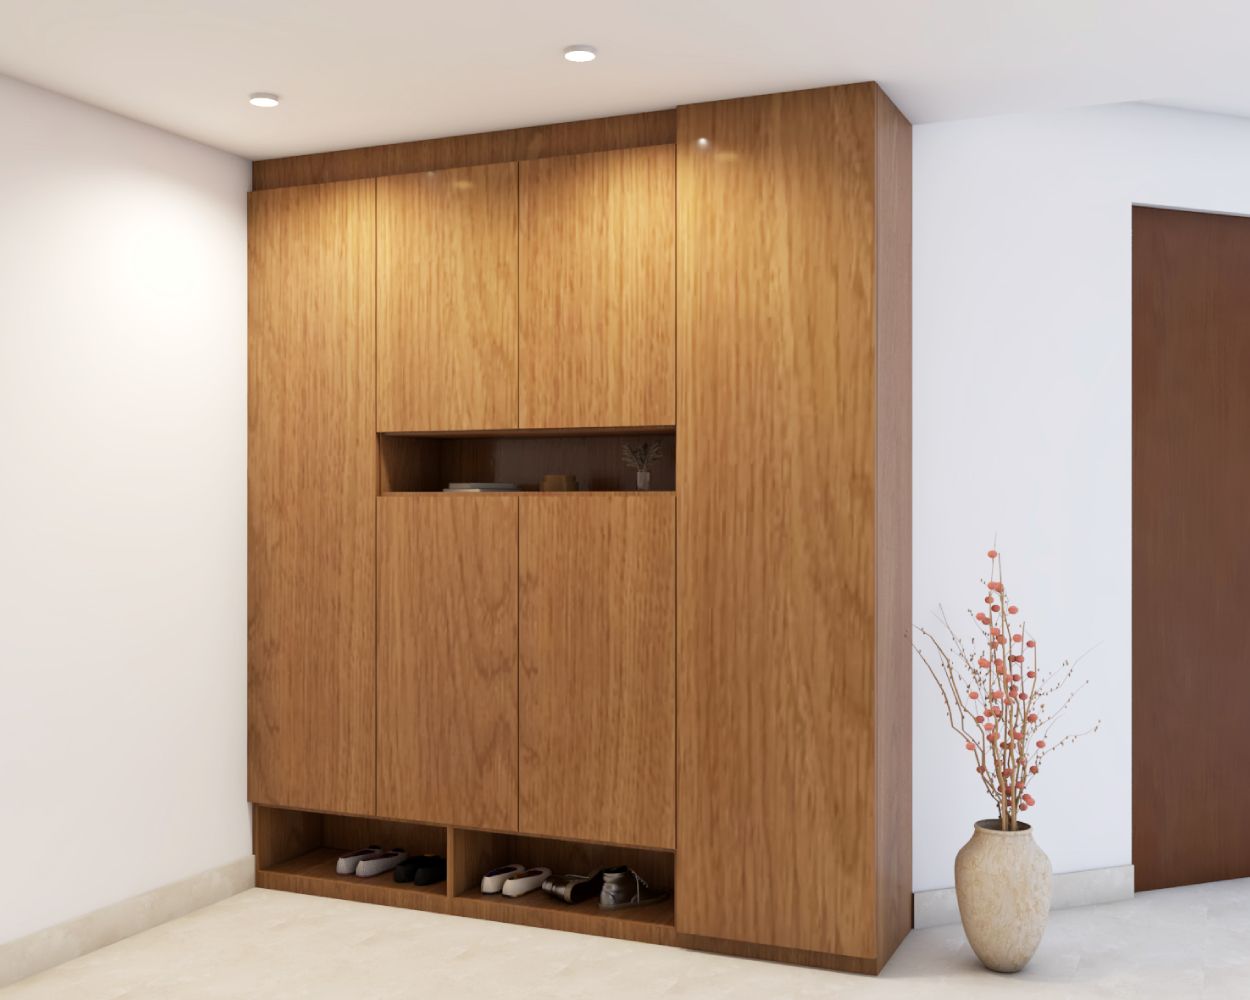 Modern Foyer Design With Floor-To-Ceiling Wooden Storage Unit